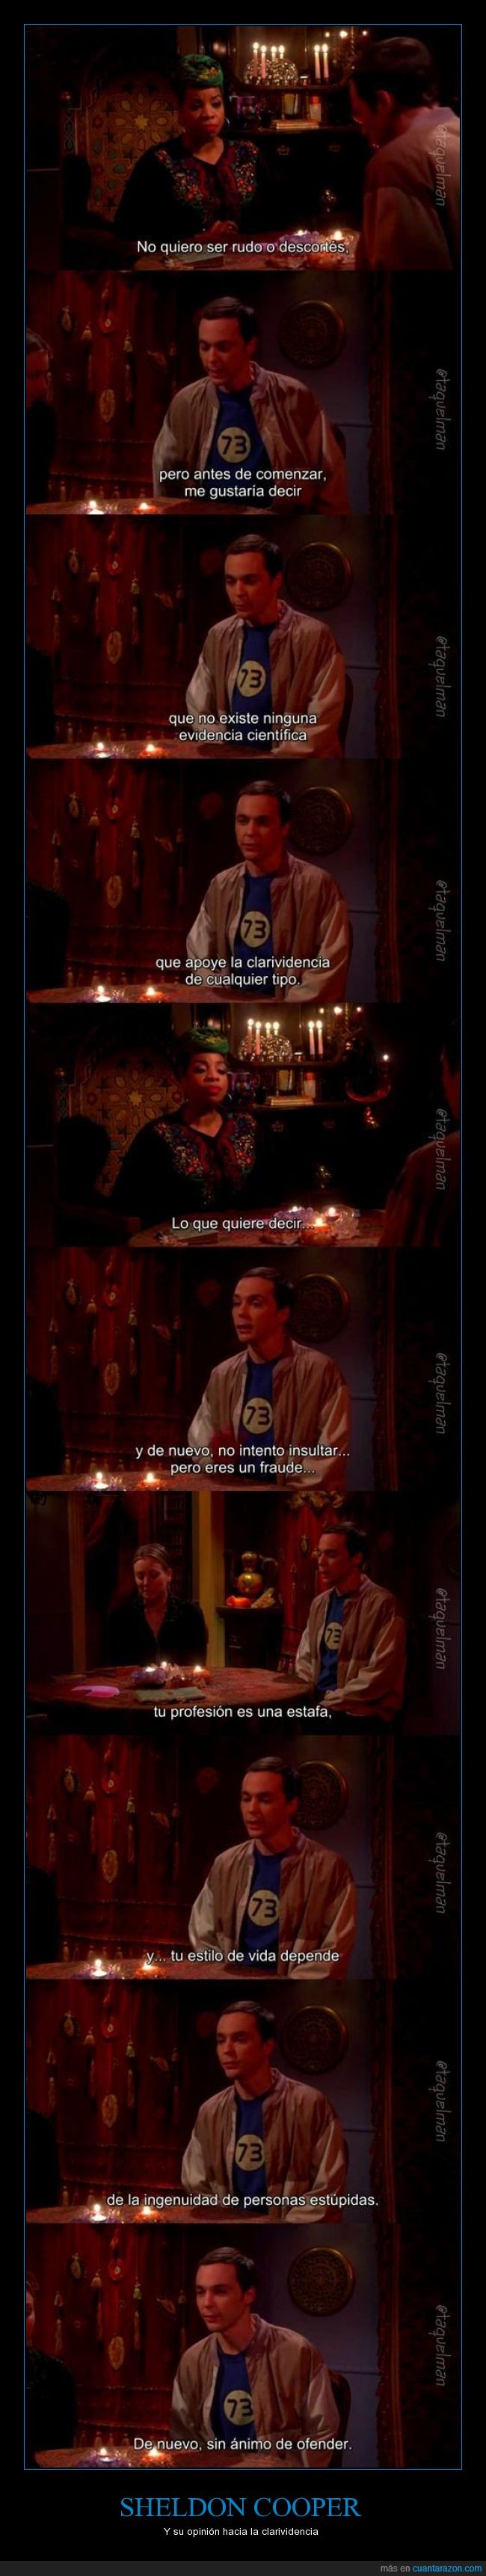 clarividencia,creer,incredulo,sarcasmo,Sheldon Cooper,the big bang theory